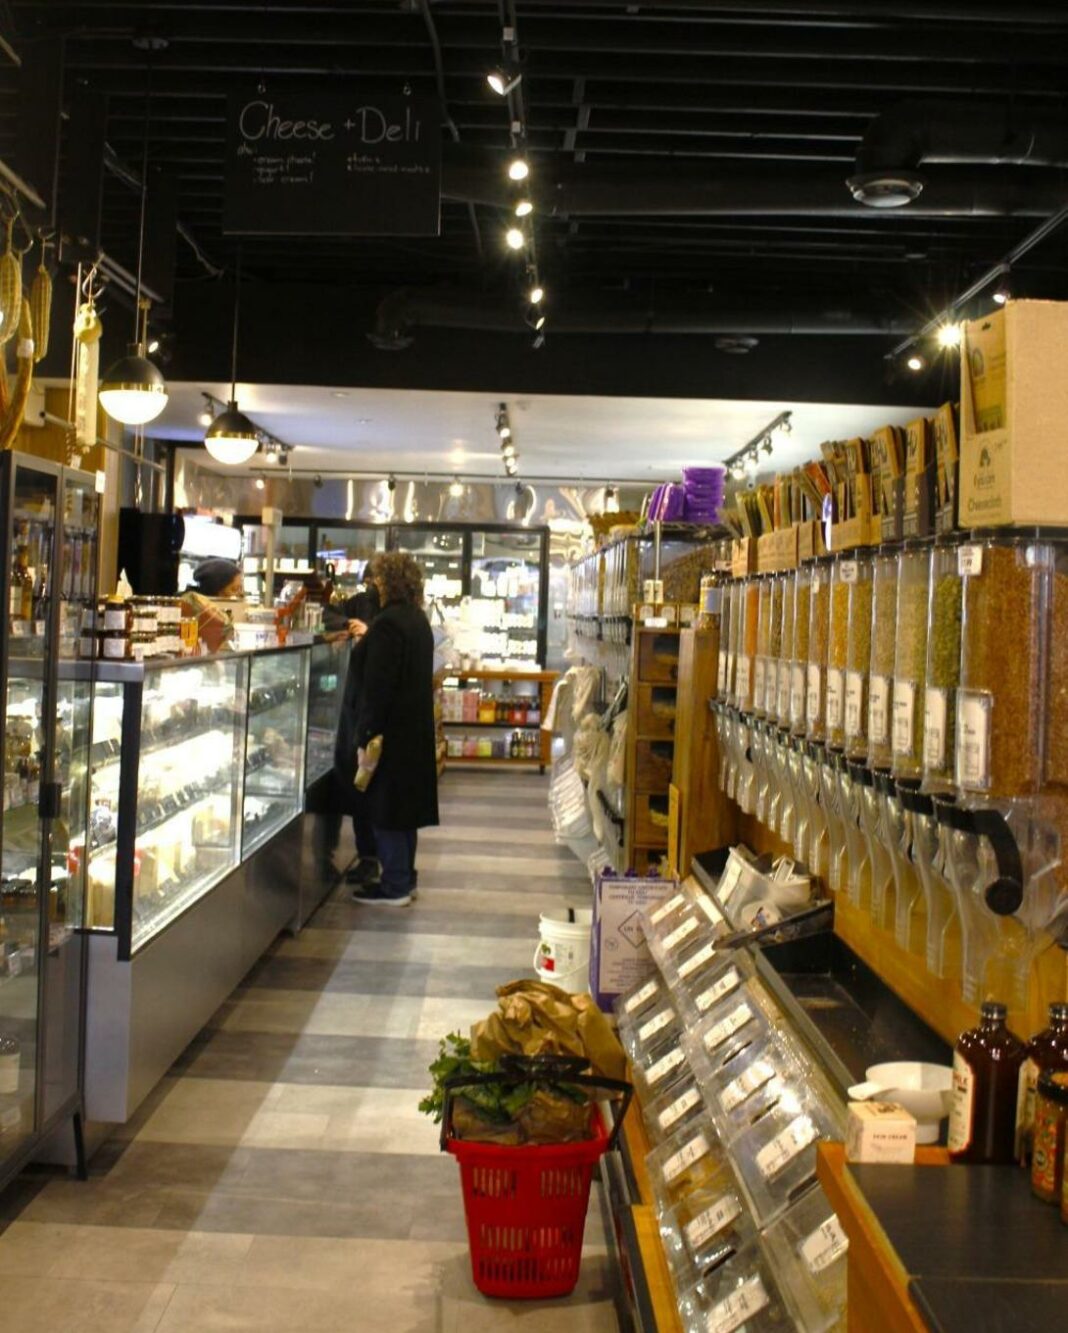 aisle of market with bulk items